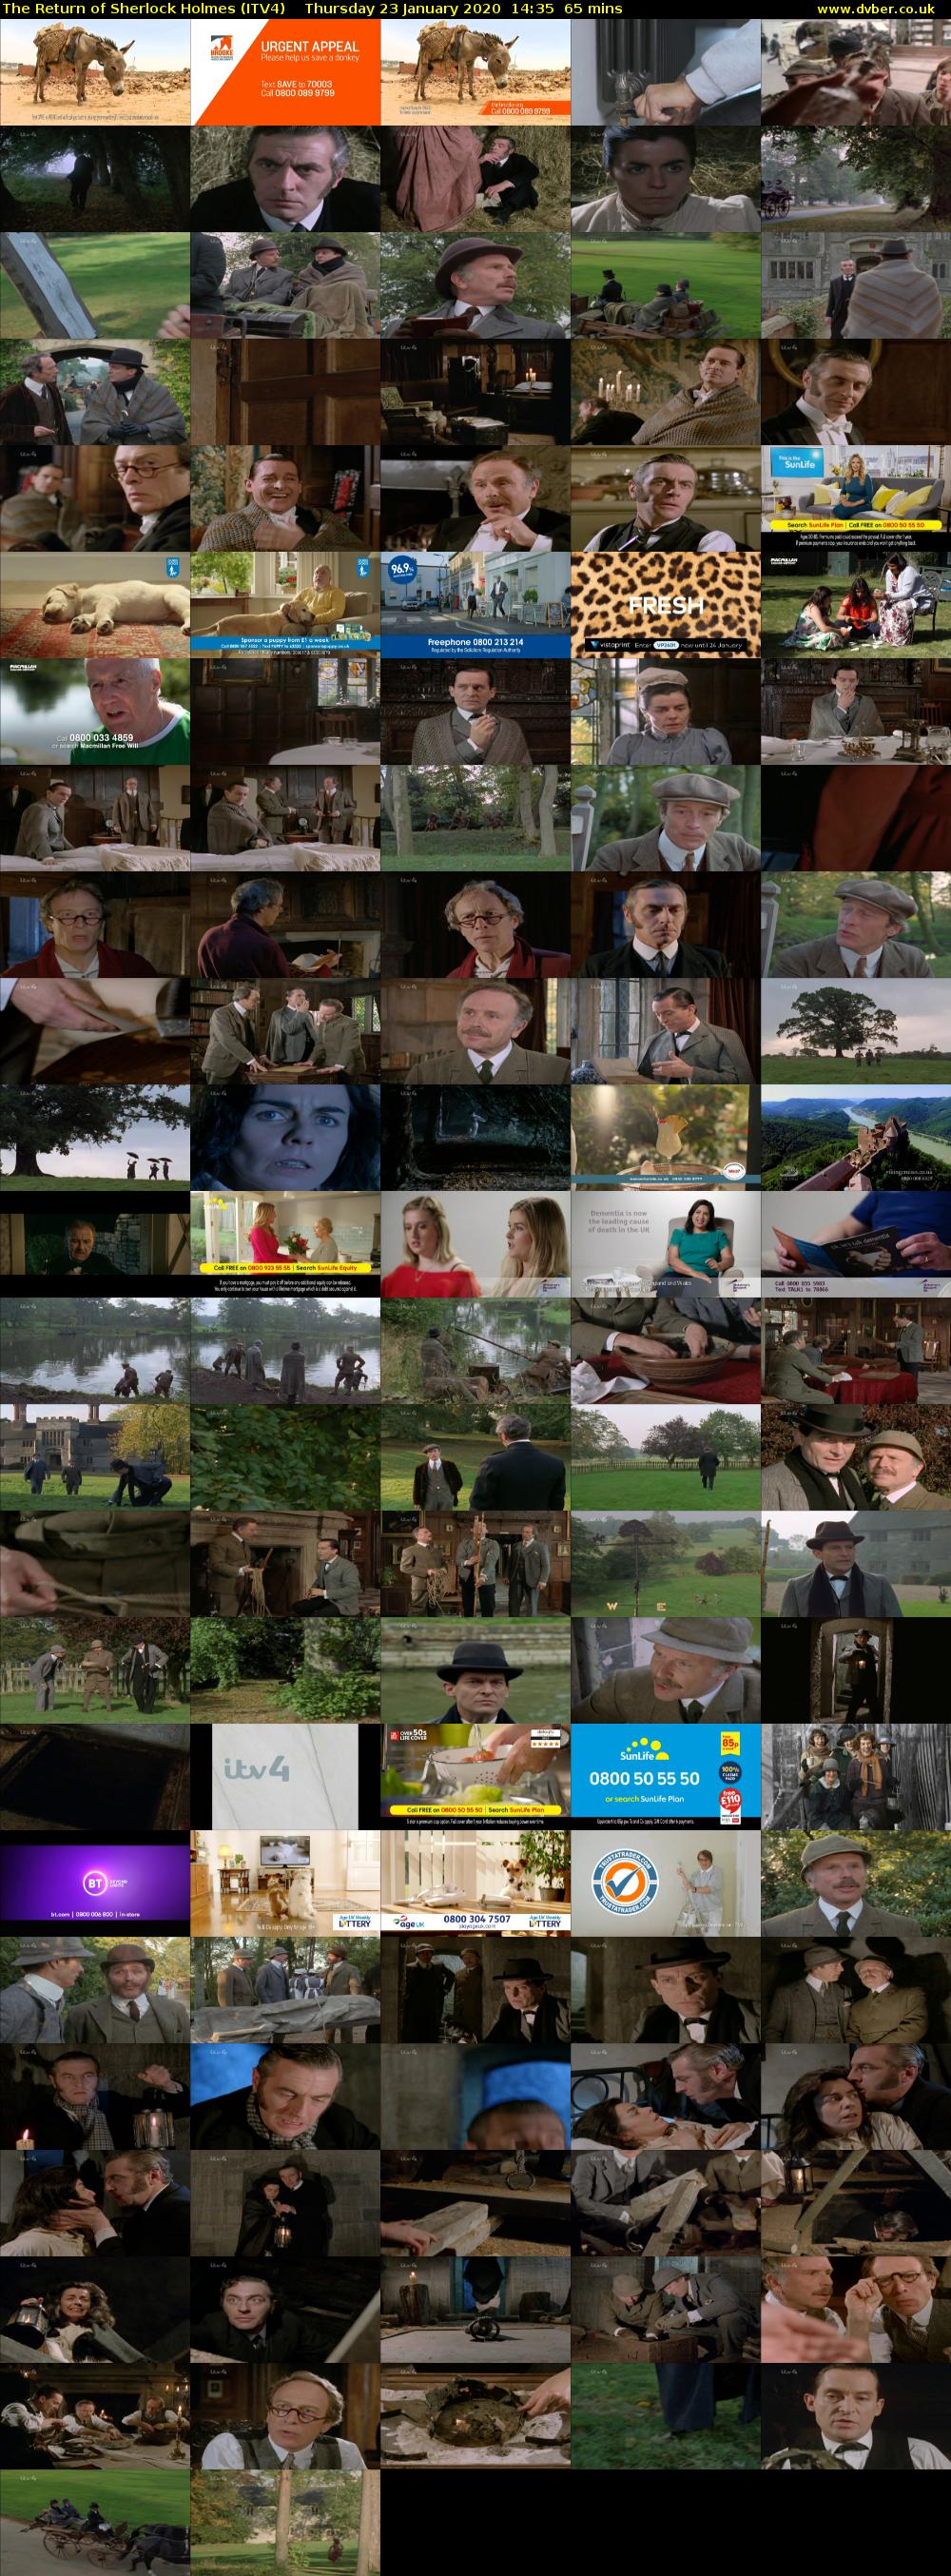 The Return of Sherlock Holmes (ITV4) Thursday 23 January 2020 14:35 - 15:40